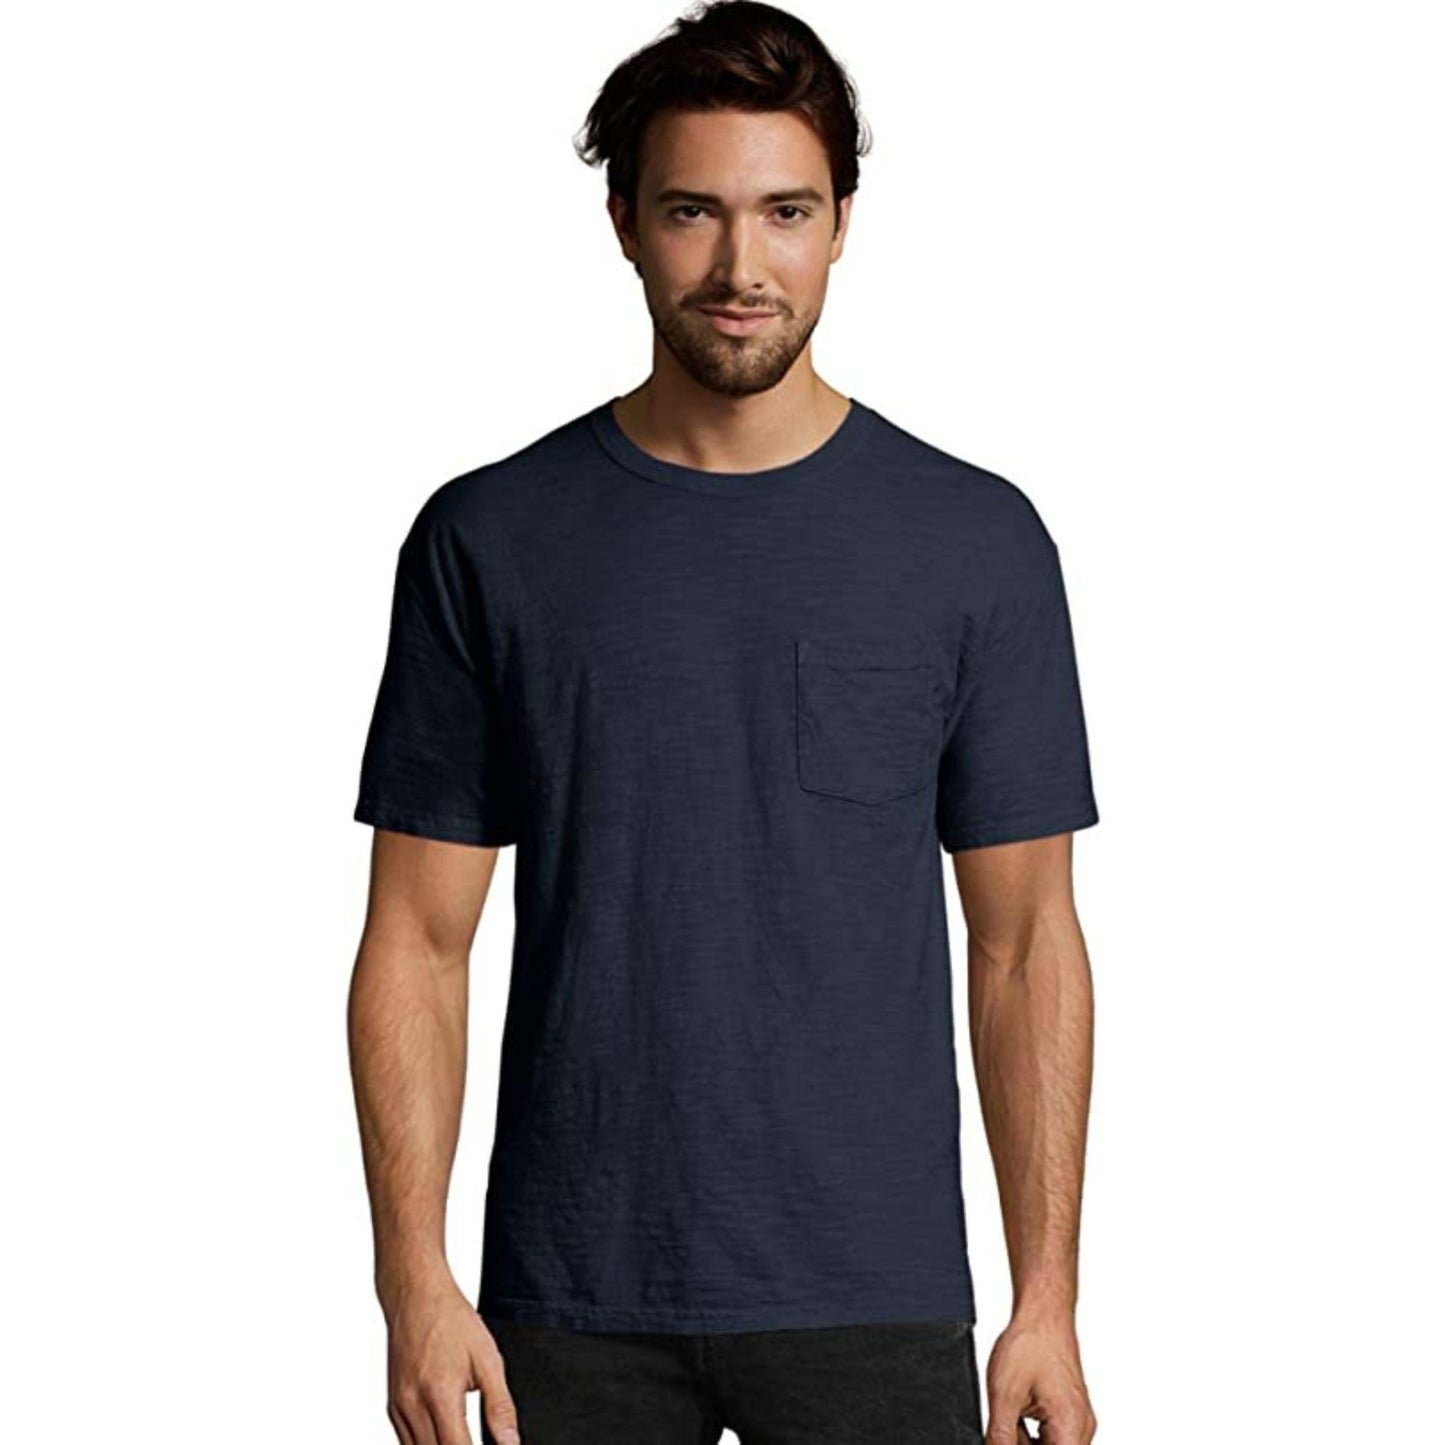 Hanes Men's T-Shirt 1901 Heritage (Dark Navy Blue)